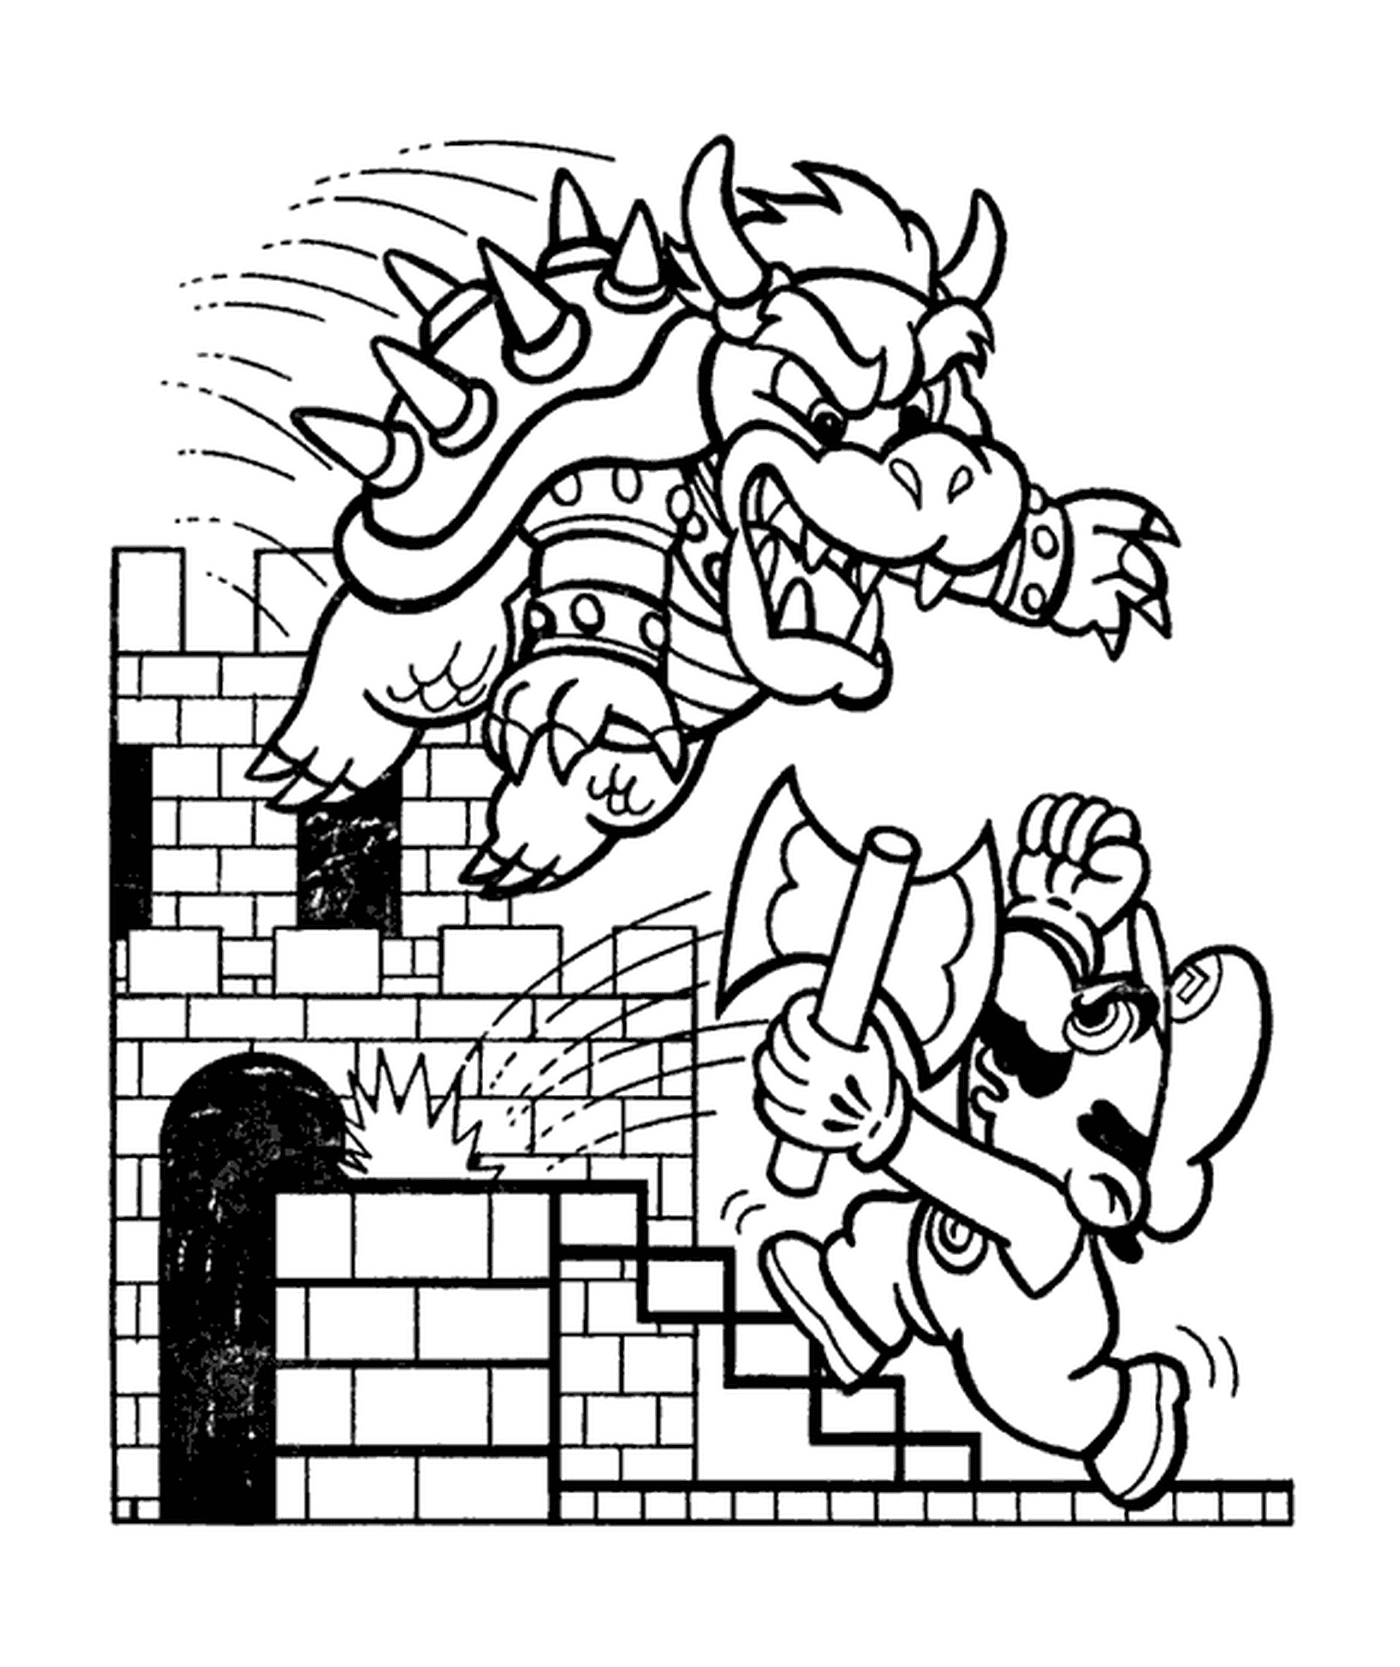  Bowser attacks Mario with fury 